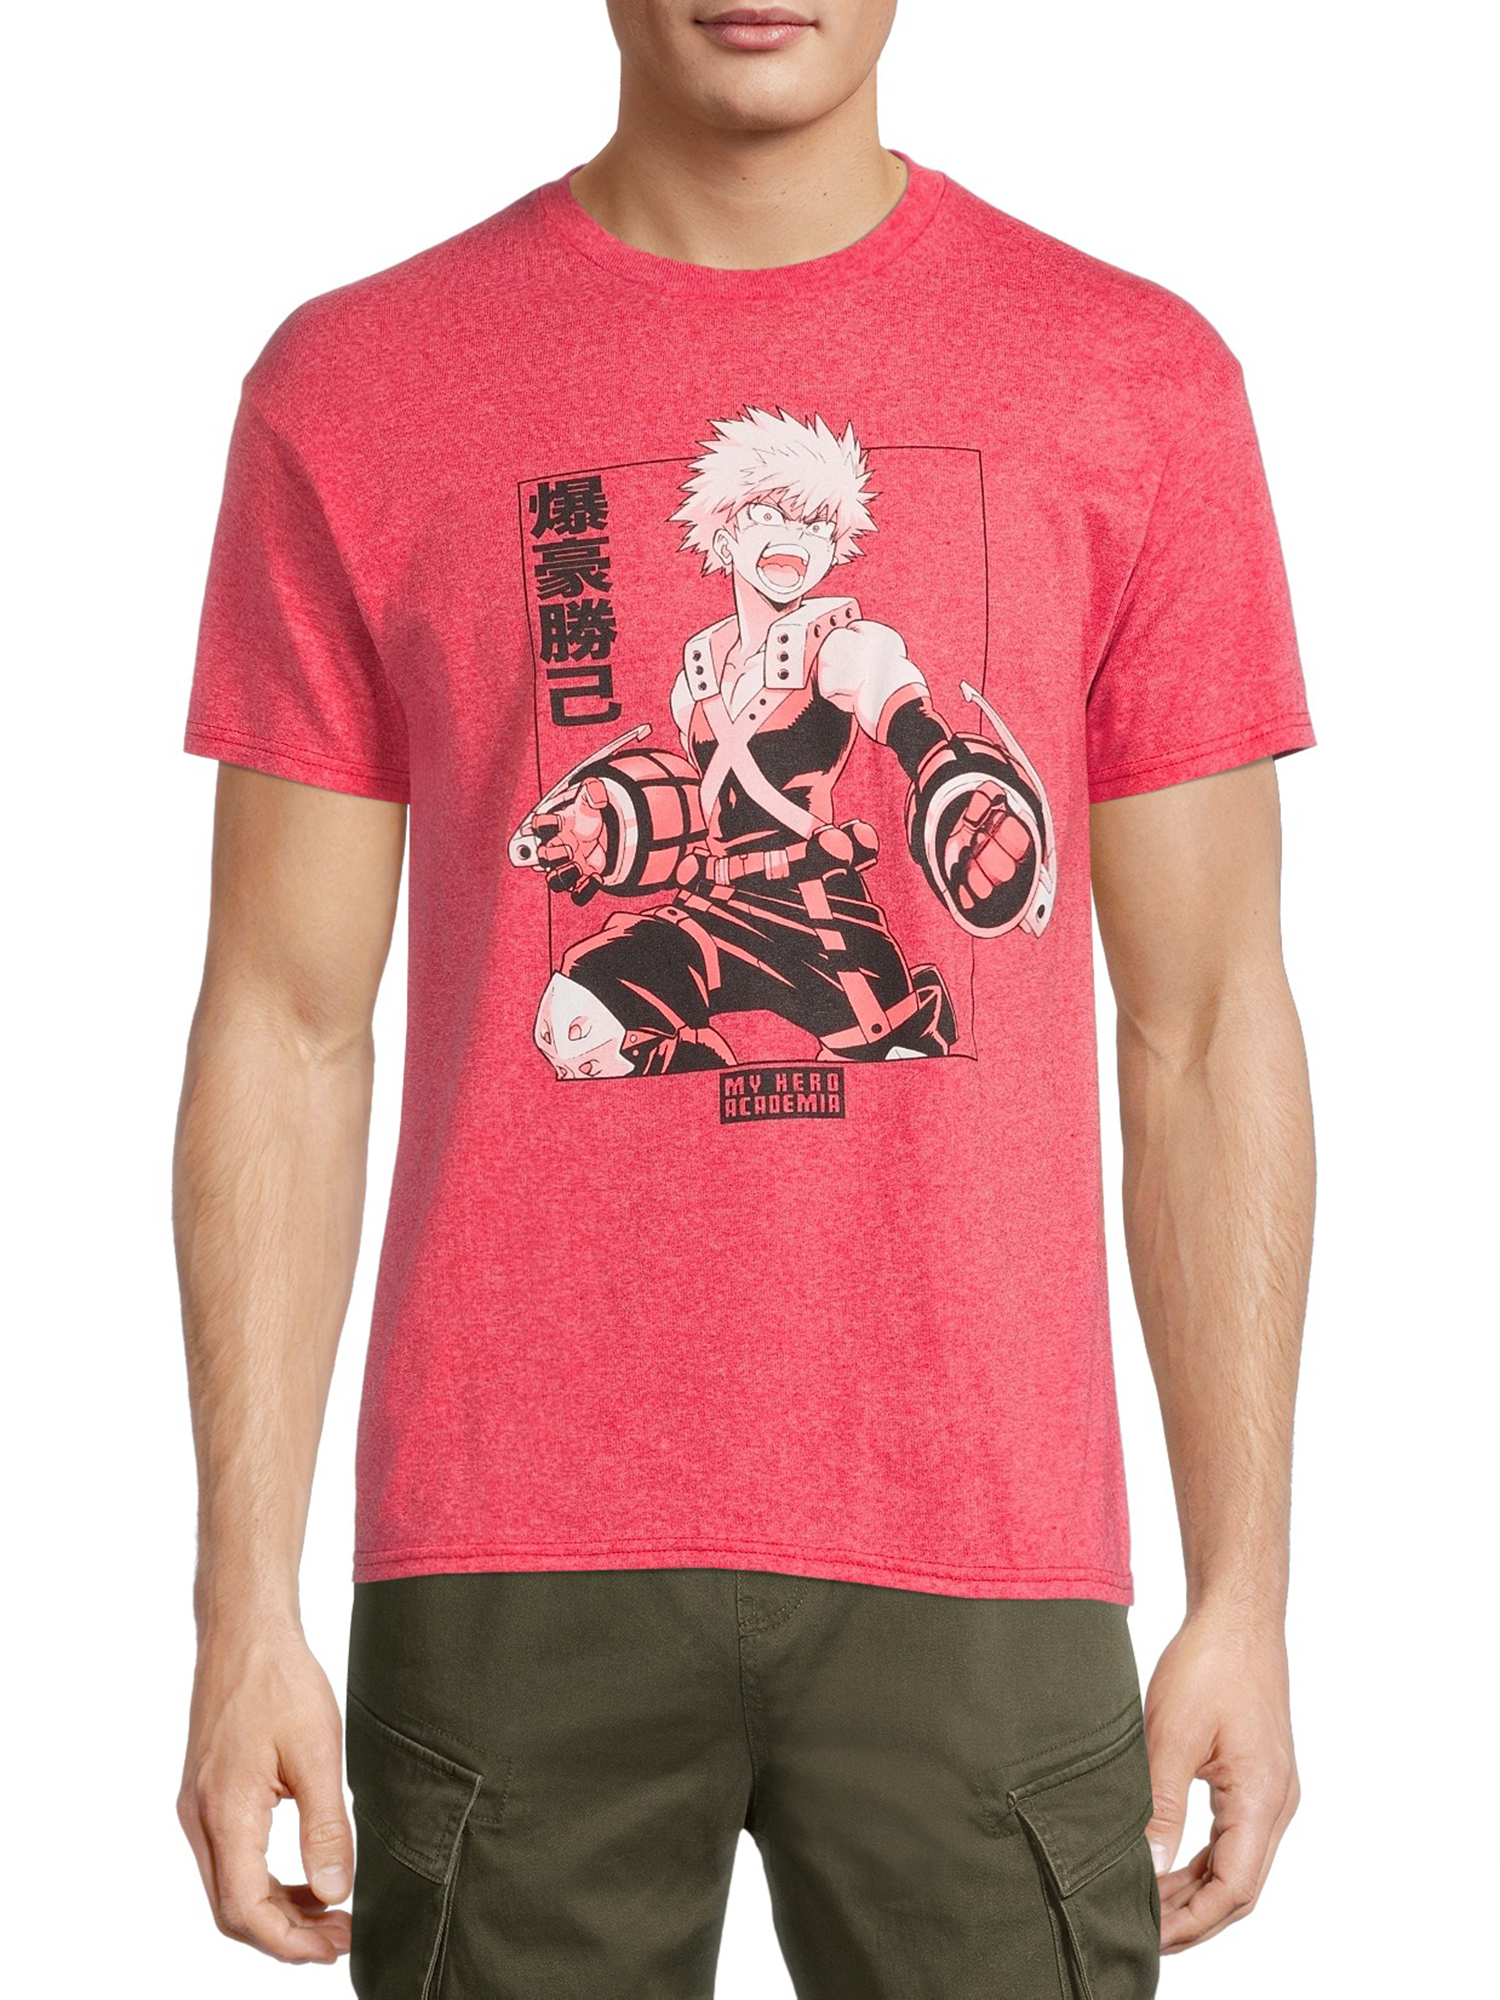 My Hero Academia Men's & Big Men's Anime Graphic Tees Shirts, 2-Pack, Sizes S-3XL, My Hero Academia Mens T-Shirts - image 2 of 6